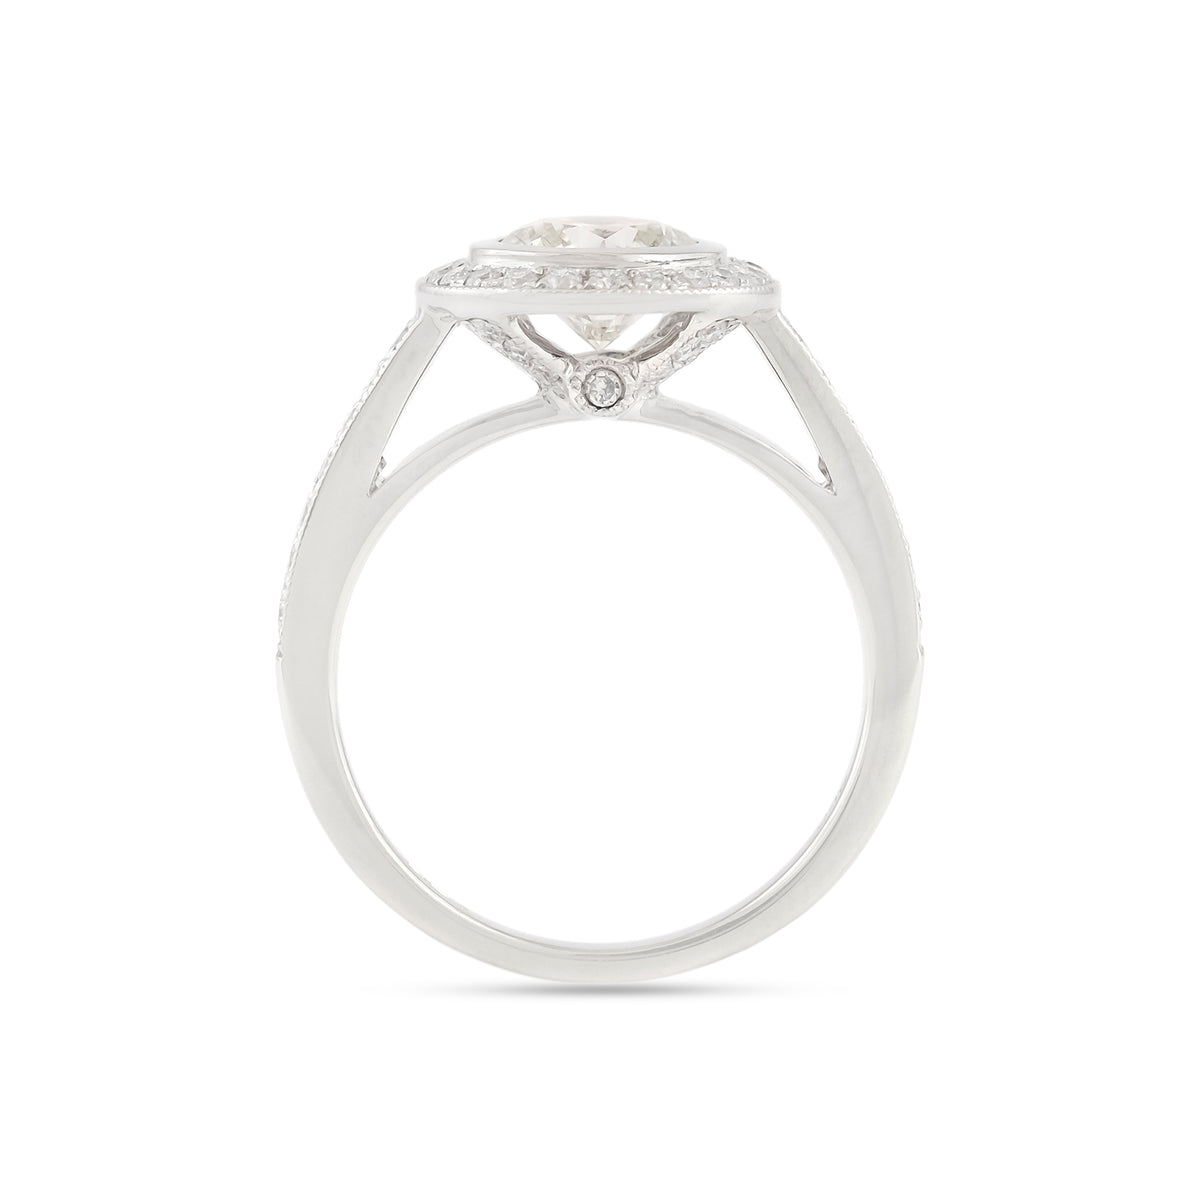 1.06ct Brilliant-Cut Diamond Halo Engagement Ring